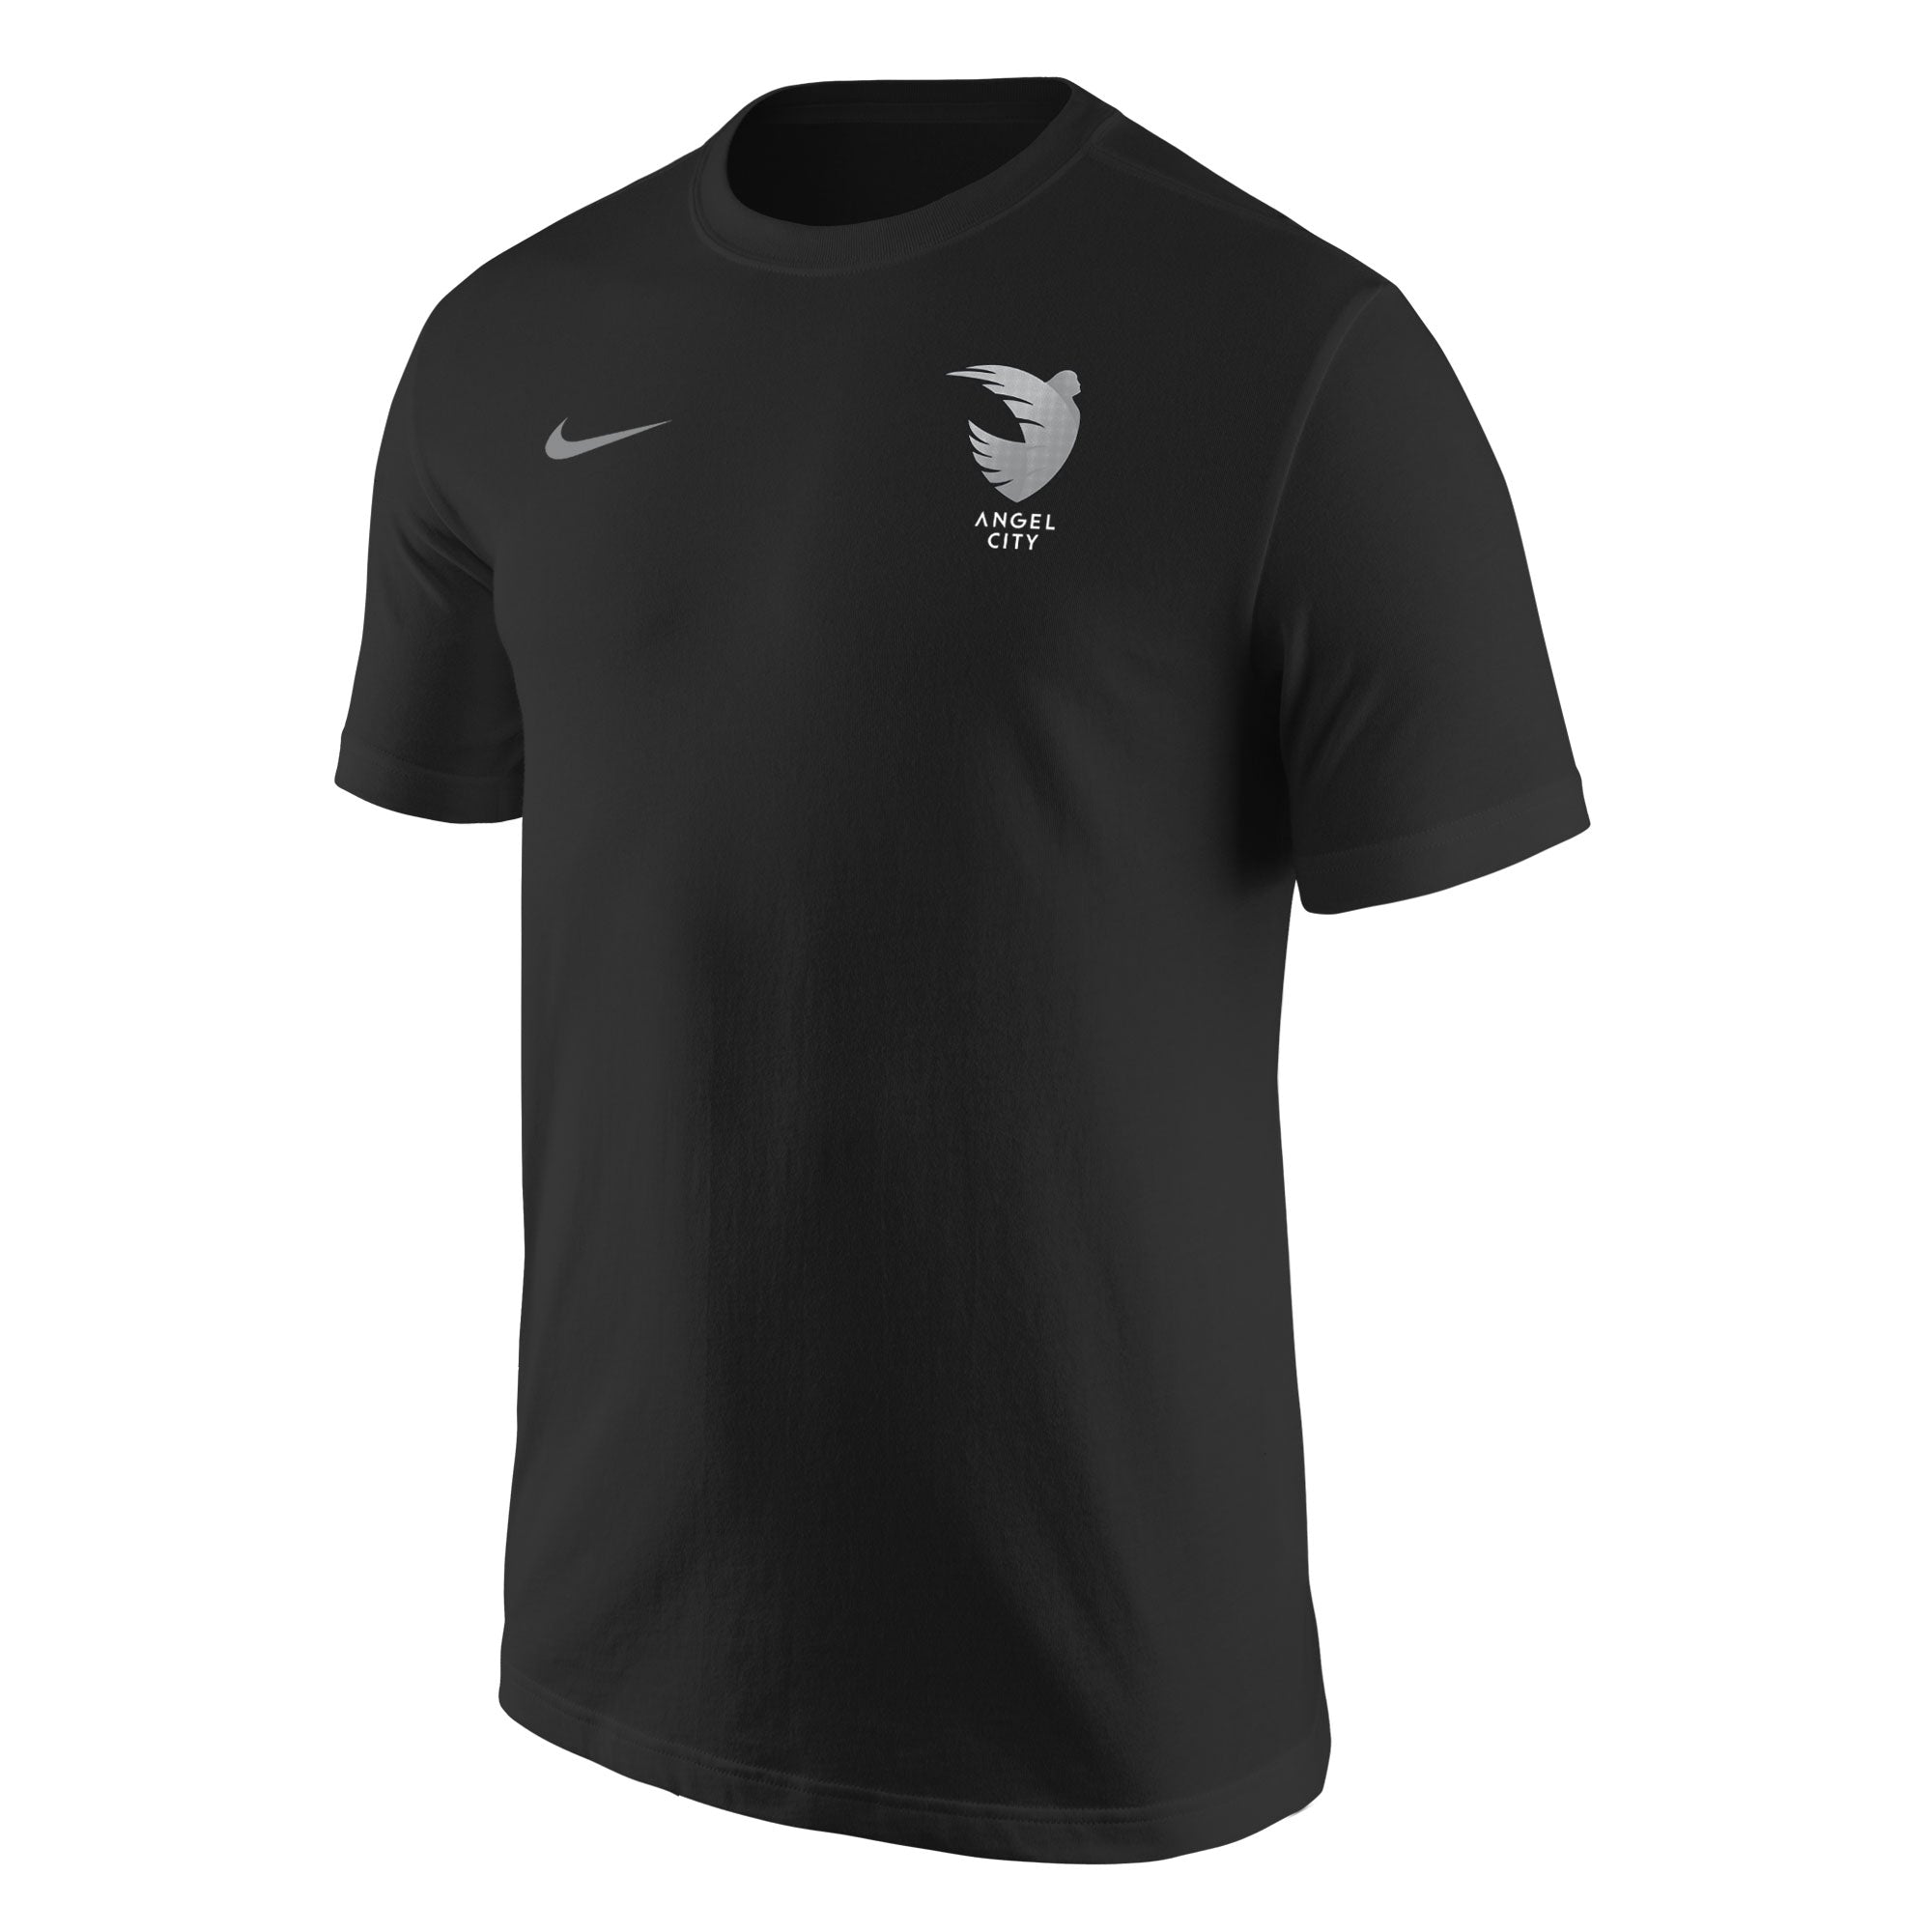 Angel City Nike Unisex Armour Emblem Black Short Sleeve T-Shirt